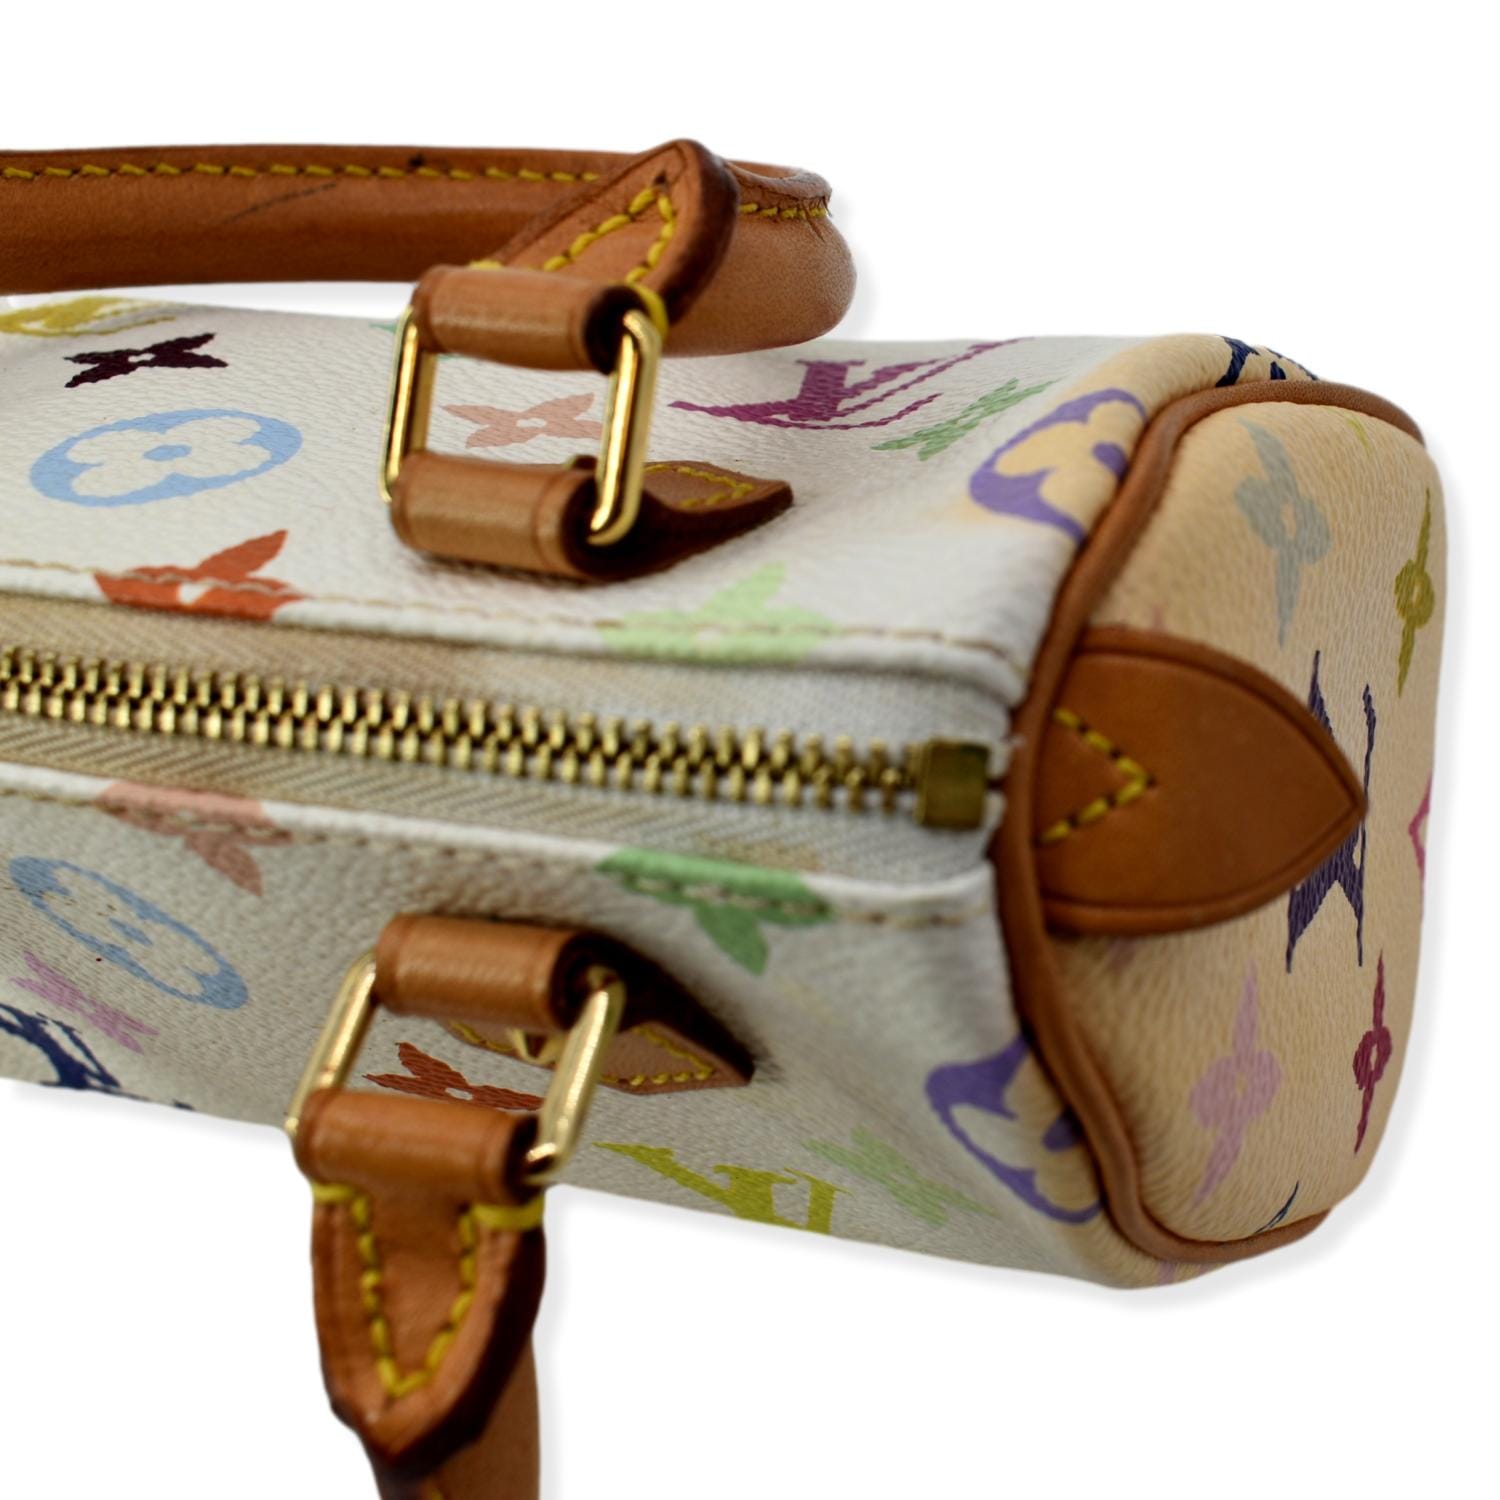 Nano Speedy Monogram – Keeks Designer Handbags